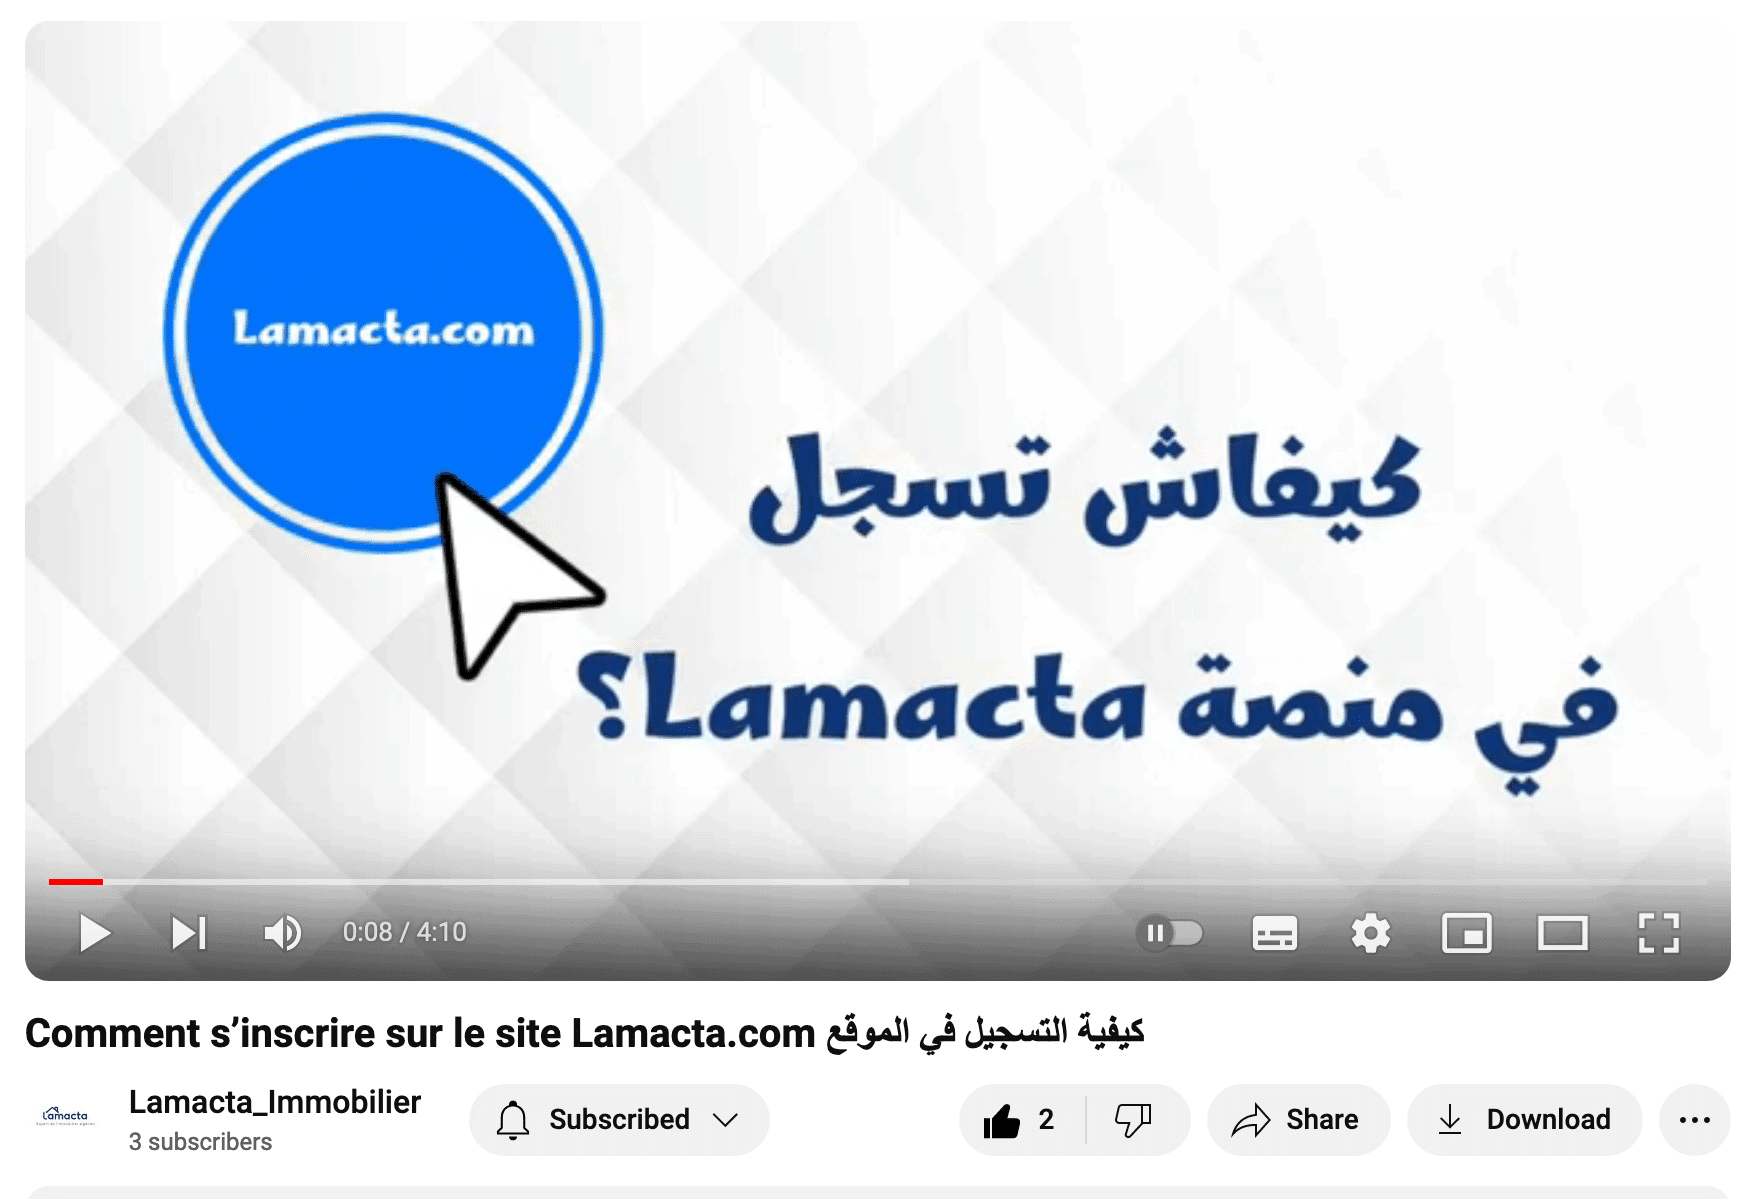 lamacta.com